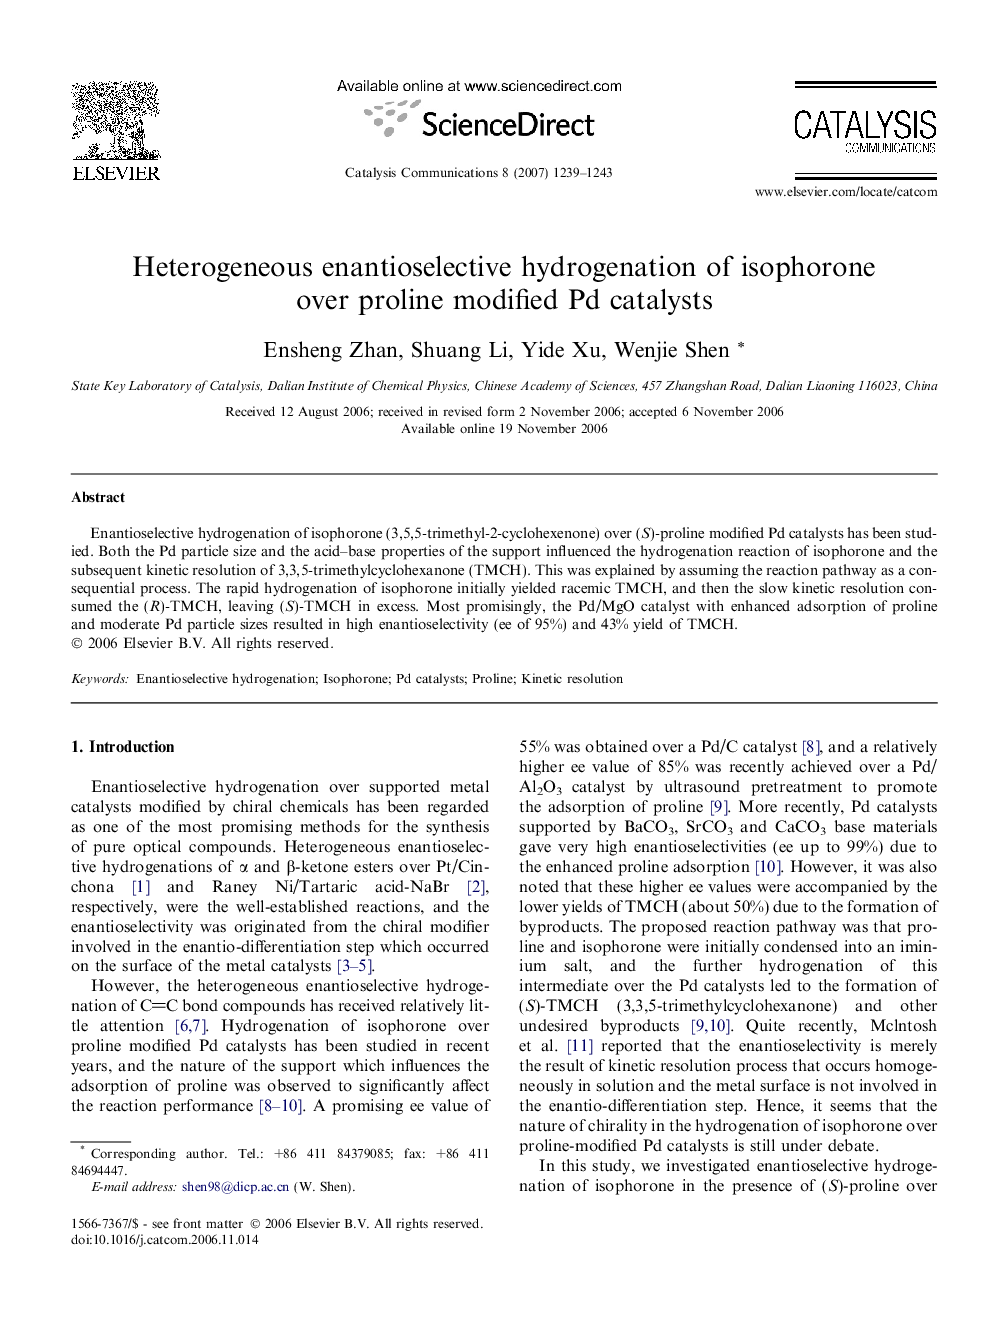 Heterogeneous enantioselective hydrogenation of isophorone over proline modified Pd catalysts